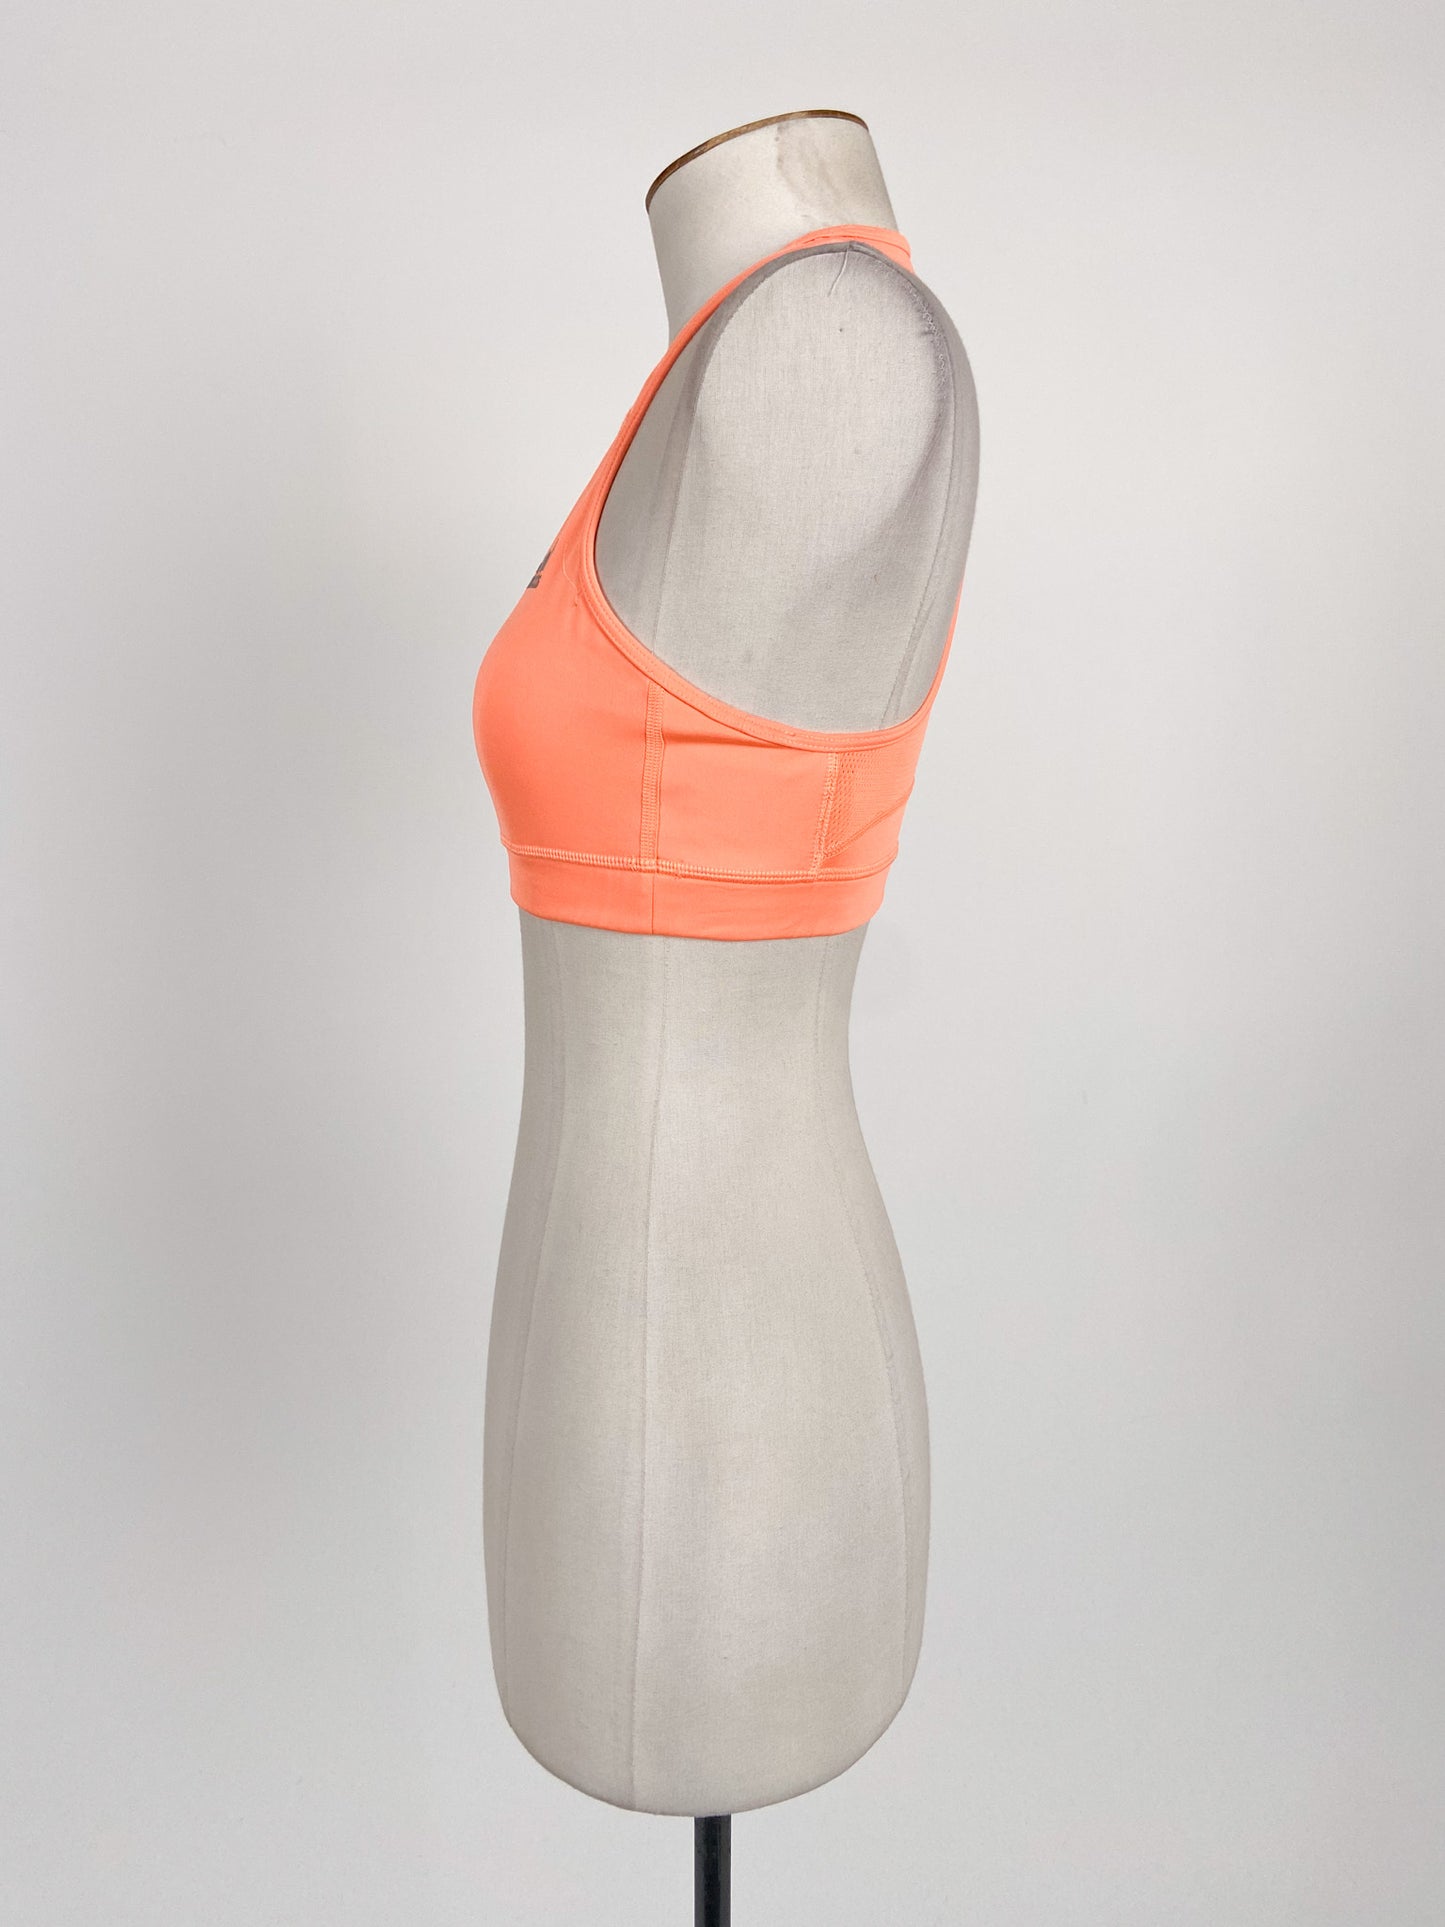 Adidas | Orange Casual Activewear Top | Size S